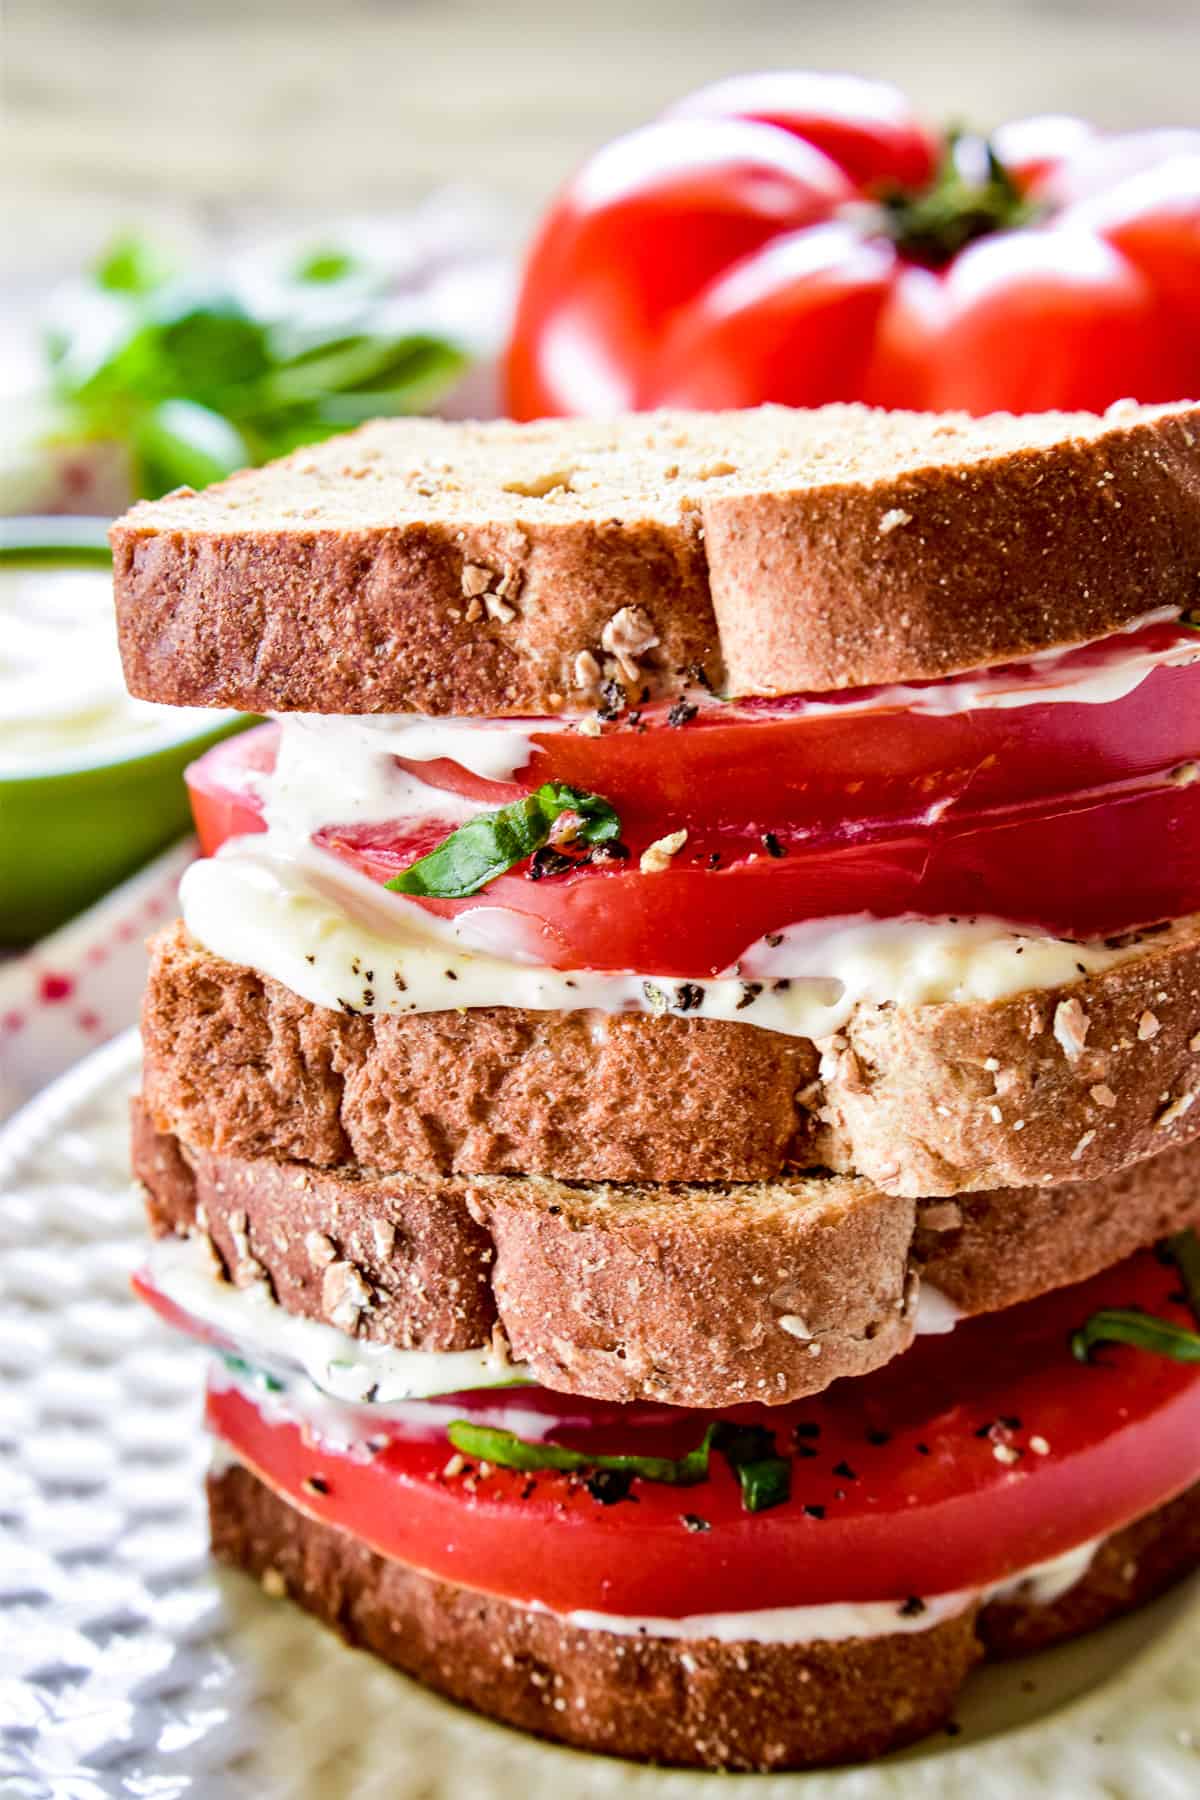 Double decker tomato sandwich on a white plate